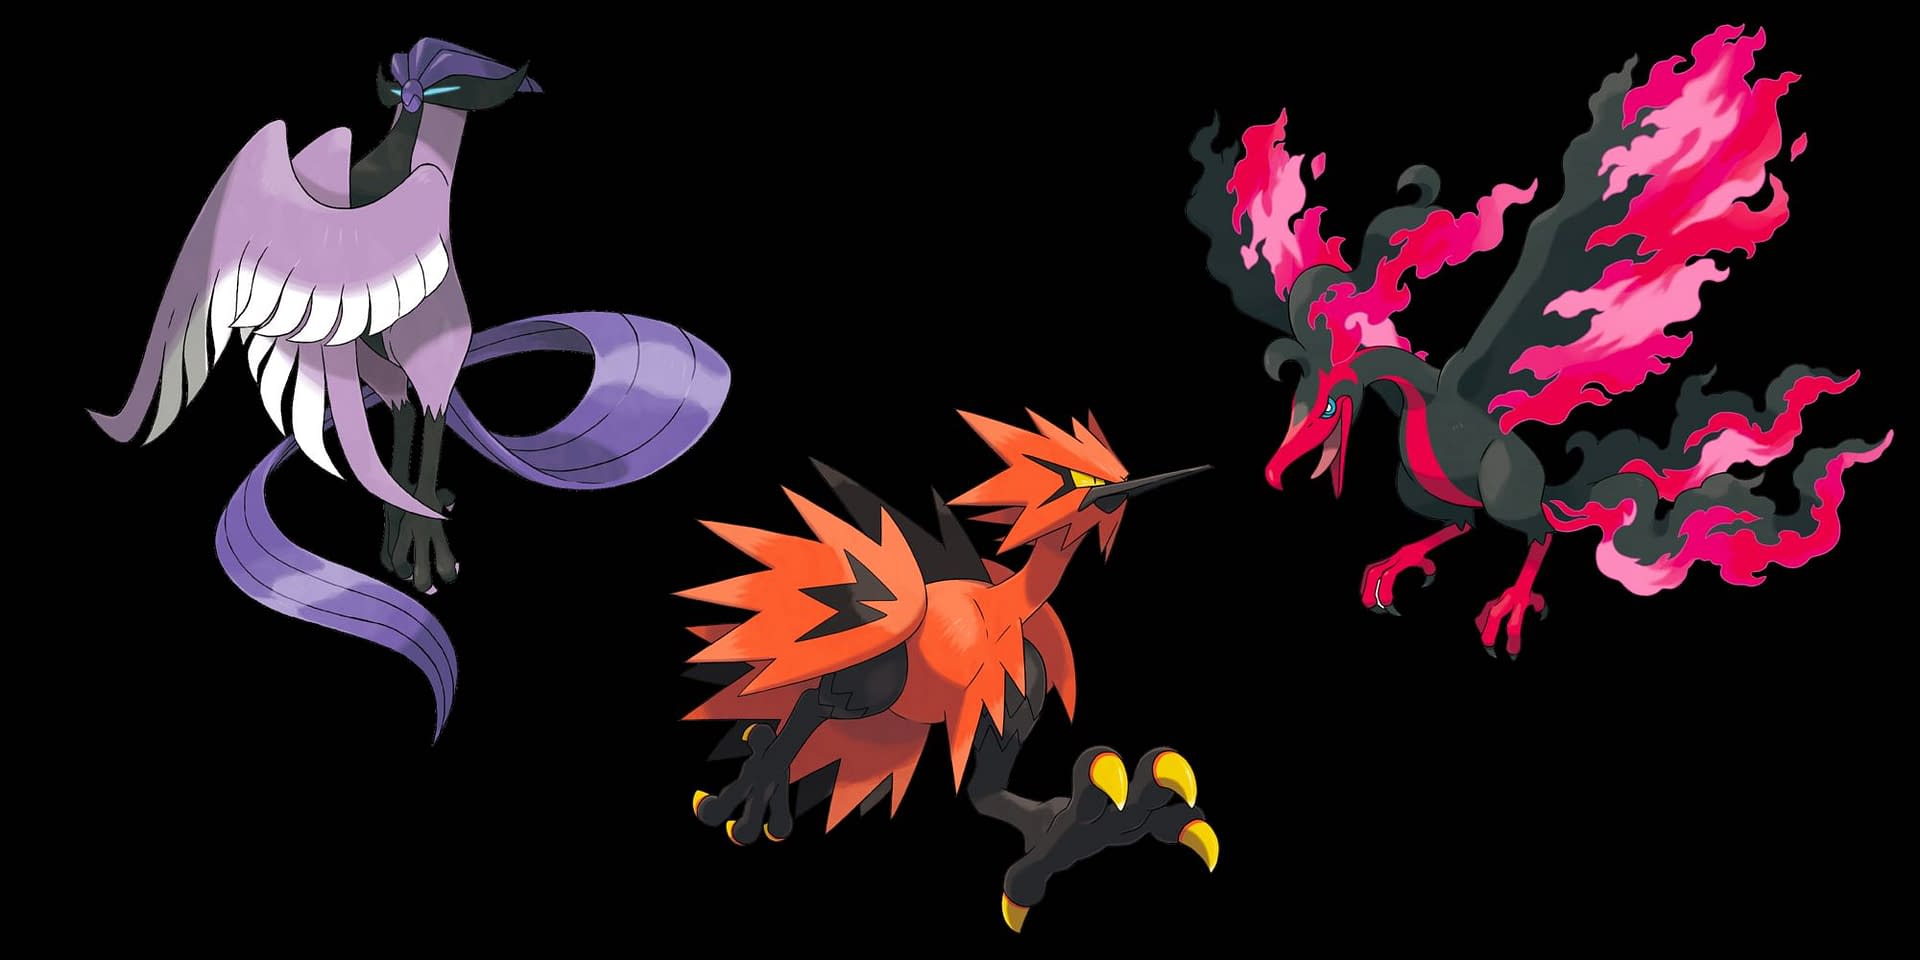 When Will the Galarian Legendary Birds Come To Pokémon GO?